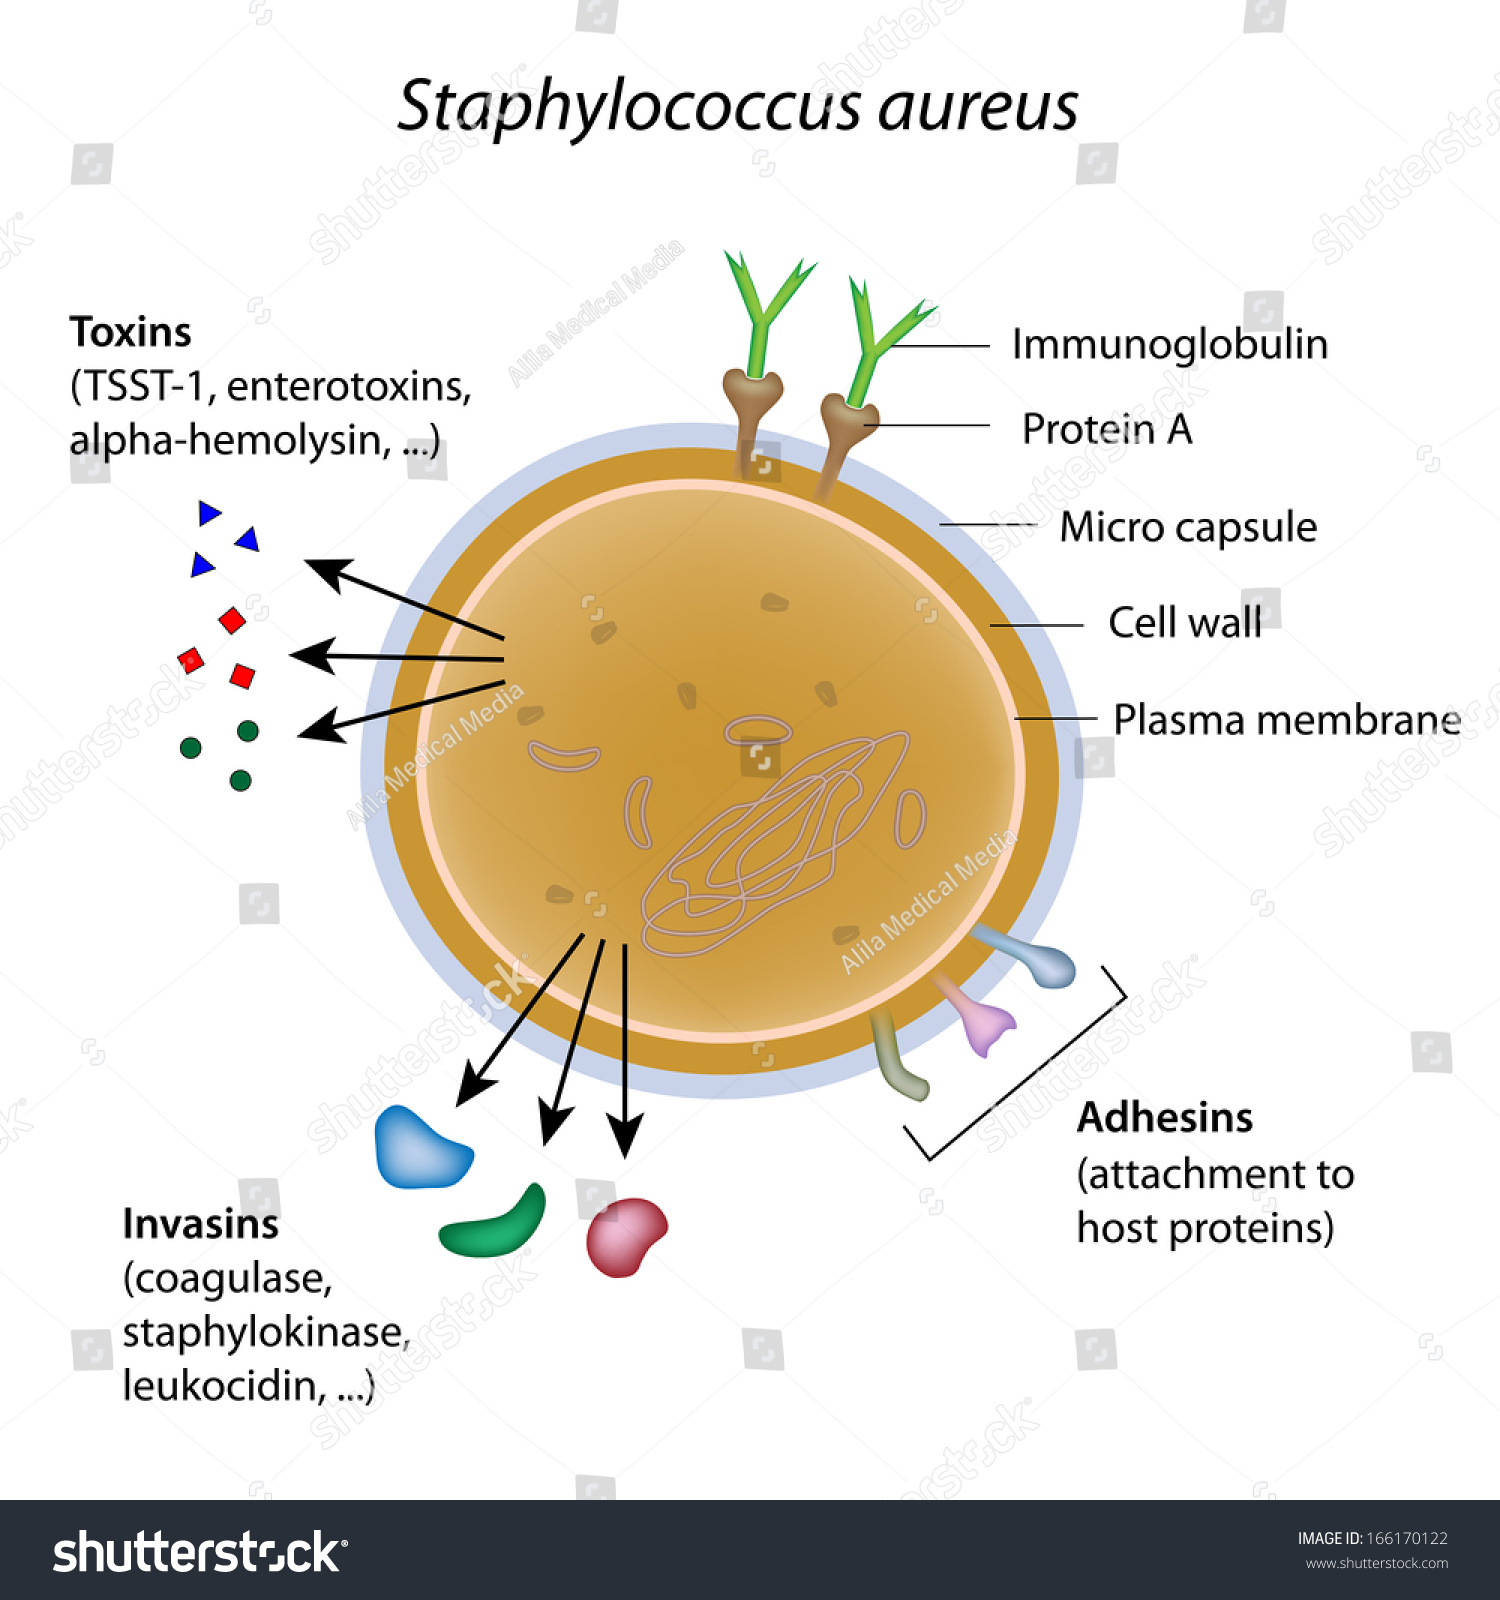 Meticilline-resistente Staphylococcus aureus - Wikipedia